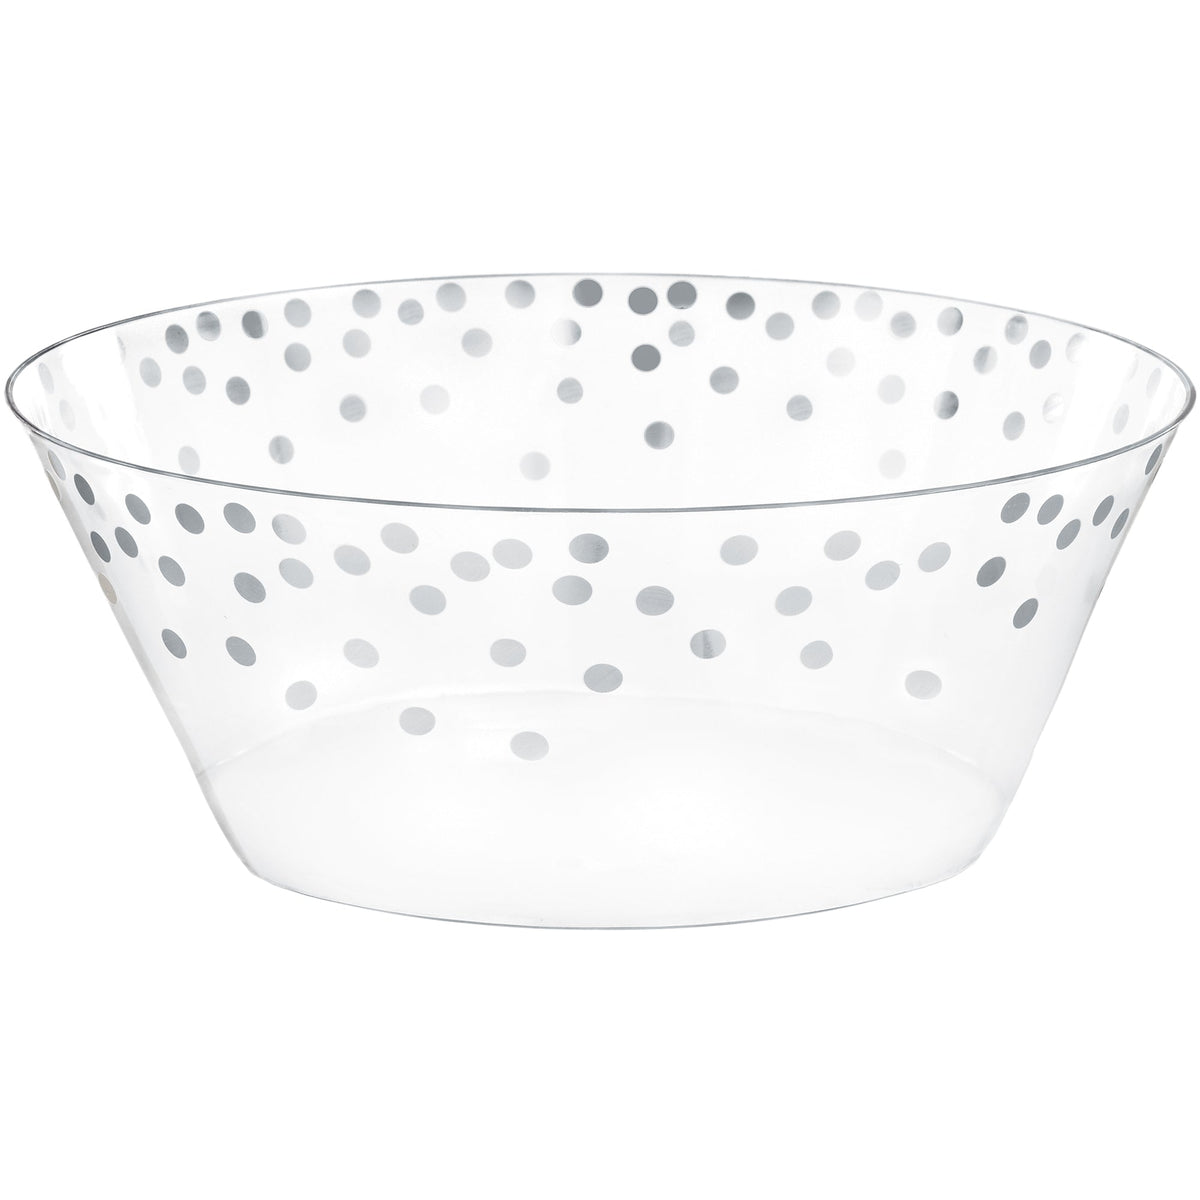 AMSCAN CA Disposable-Plasticware Silver PET Plastic Small Serving Bowl, 1 Count